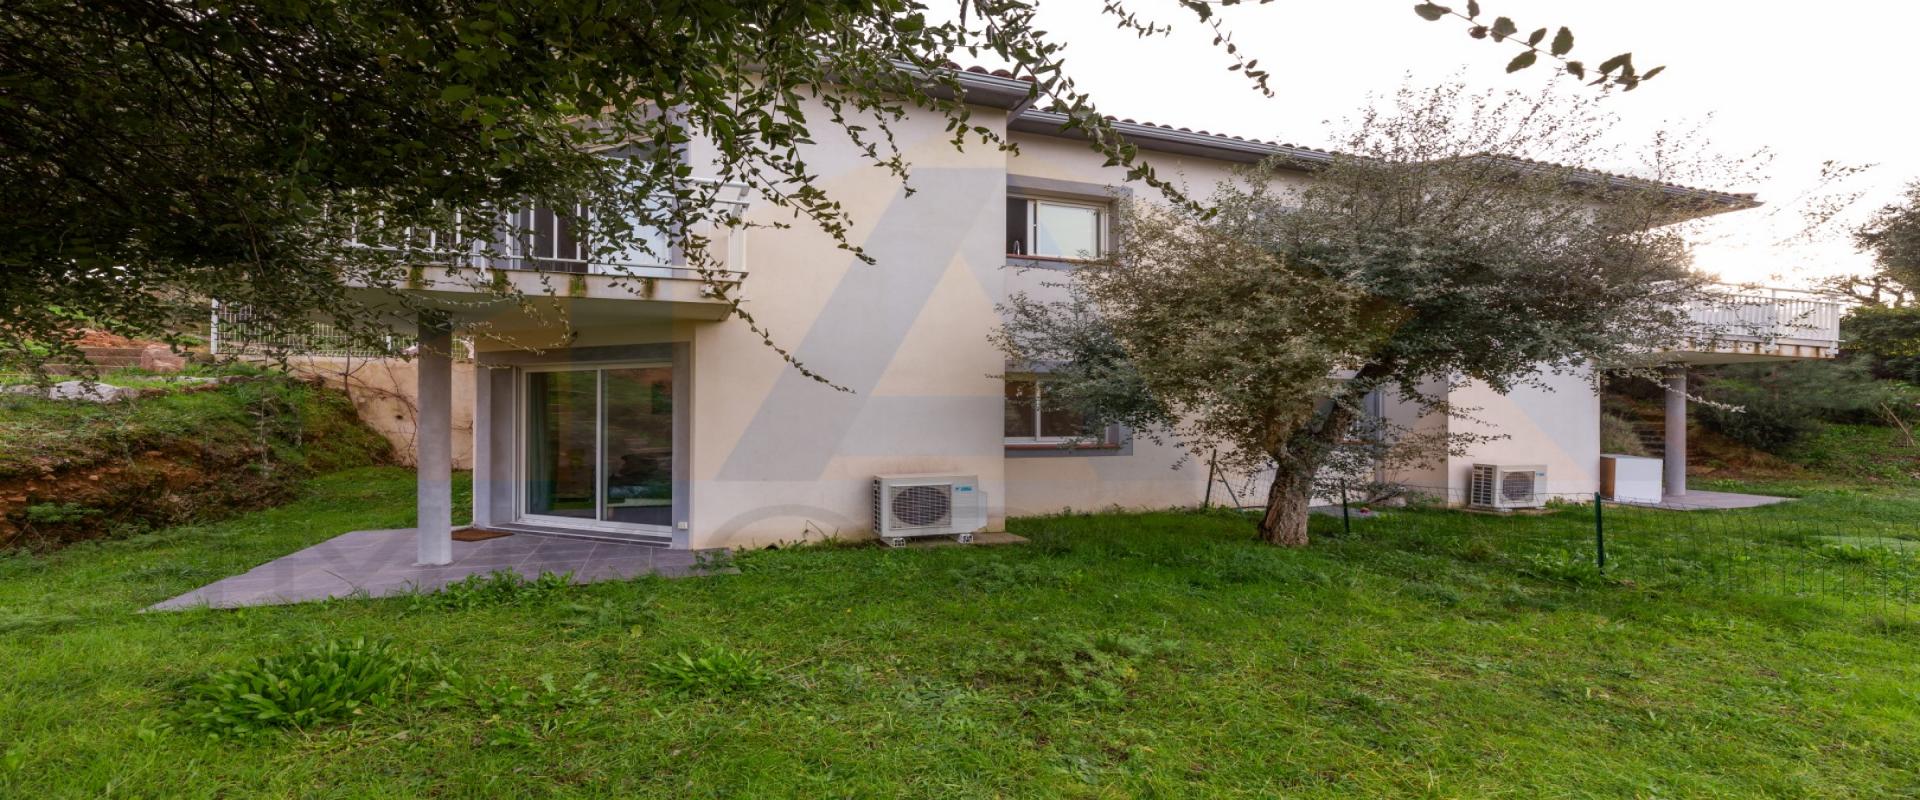 À vendre villa F4 duplex sur la commune d'Afa - Ajaccio